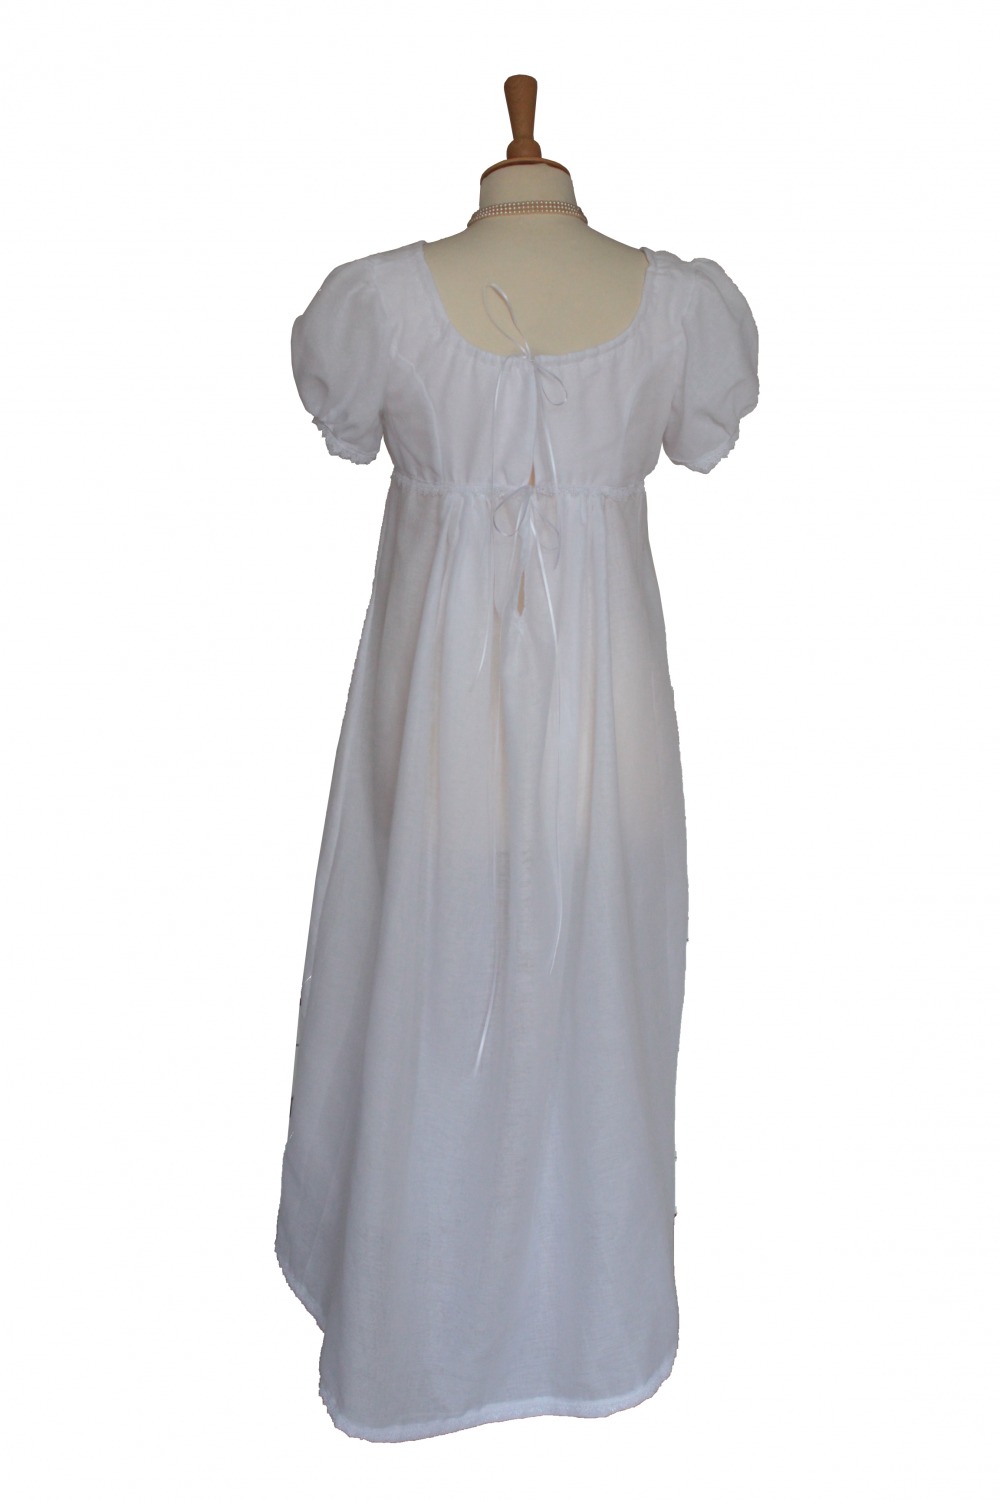 Ladies Older Girl's 19th Century Petite Jane Austen Regency Day Gown Costume Size 10 - 12 Image